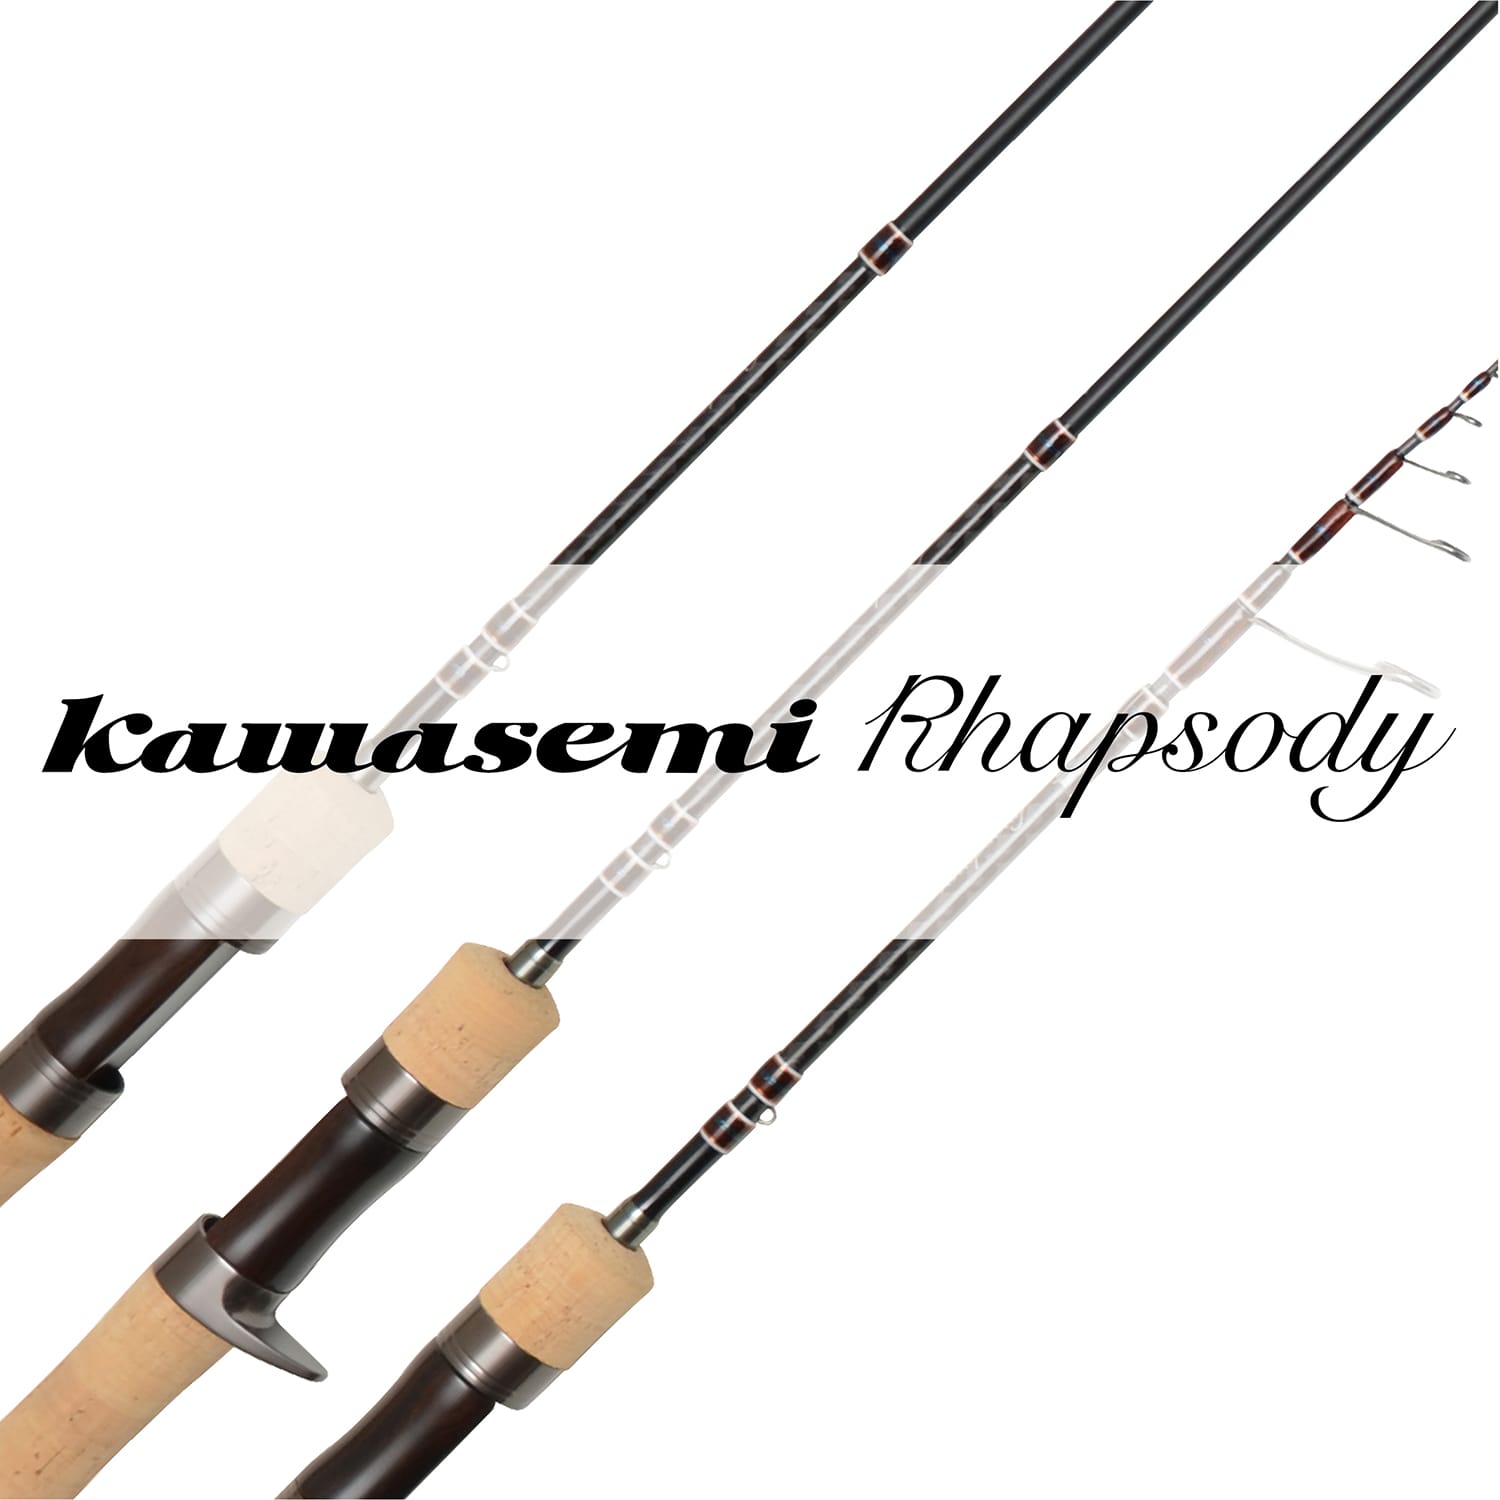 Jackson Kawasemi Rhapsody Rod Series